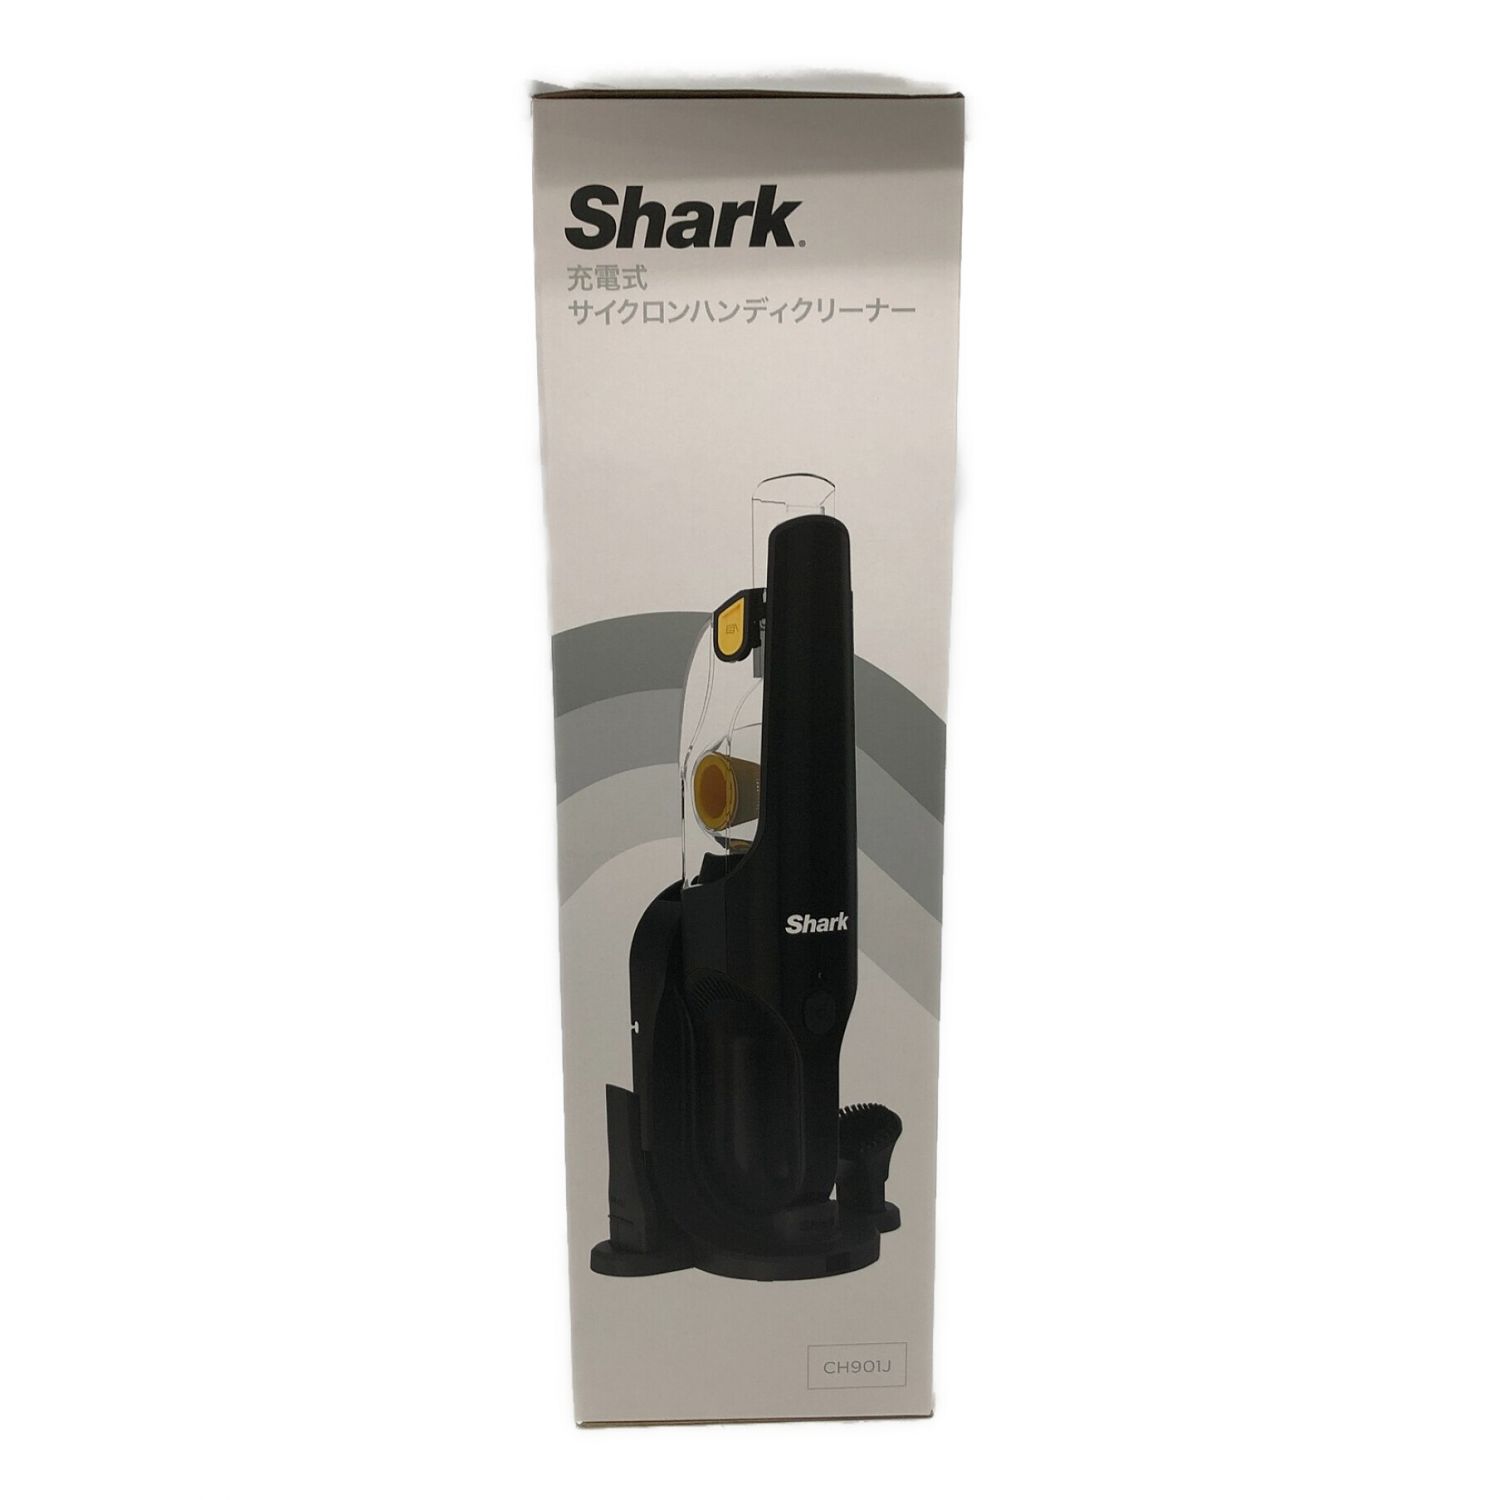 SHARK (シャーク) ハンディクリーナー コードレス(充電式) CH901J 程度